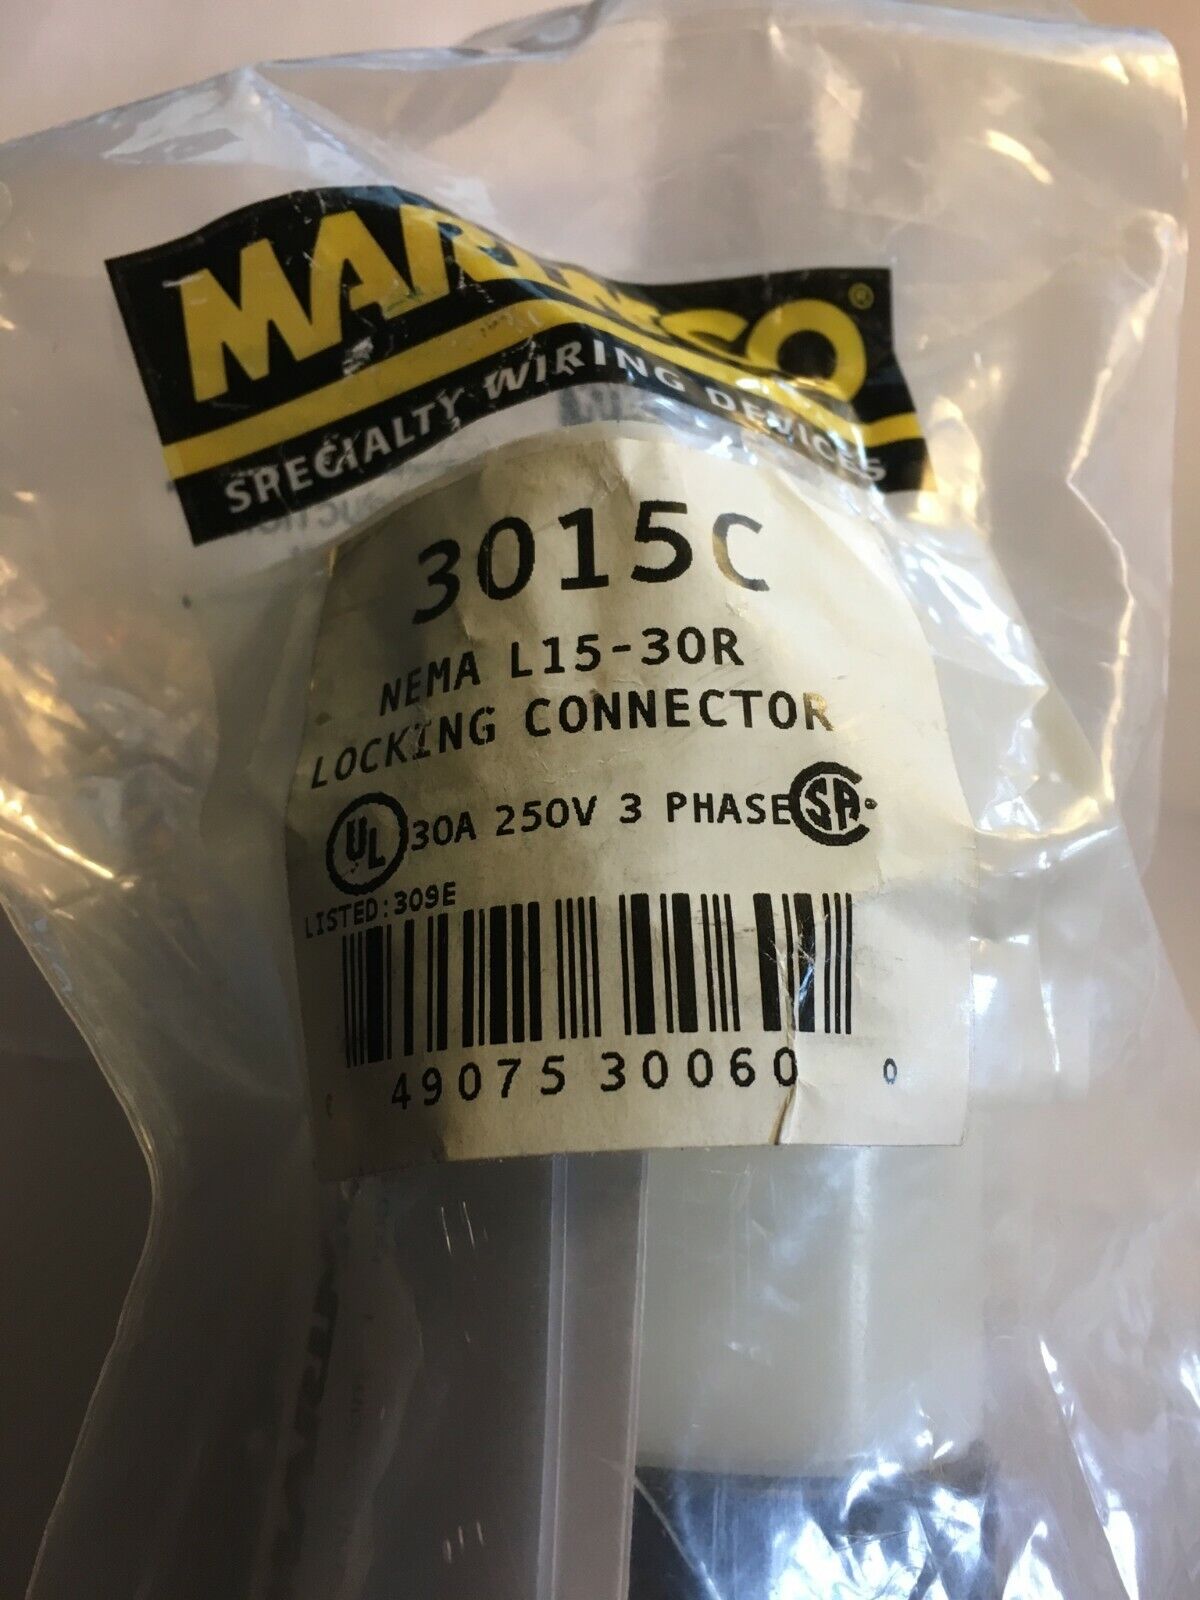 MARINCO 3015C NEMA LOCKING CONNECTOR 30A 250V 3 PHASE New In Bag NOS